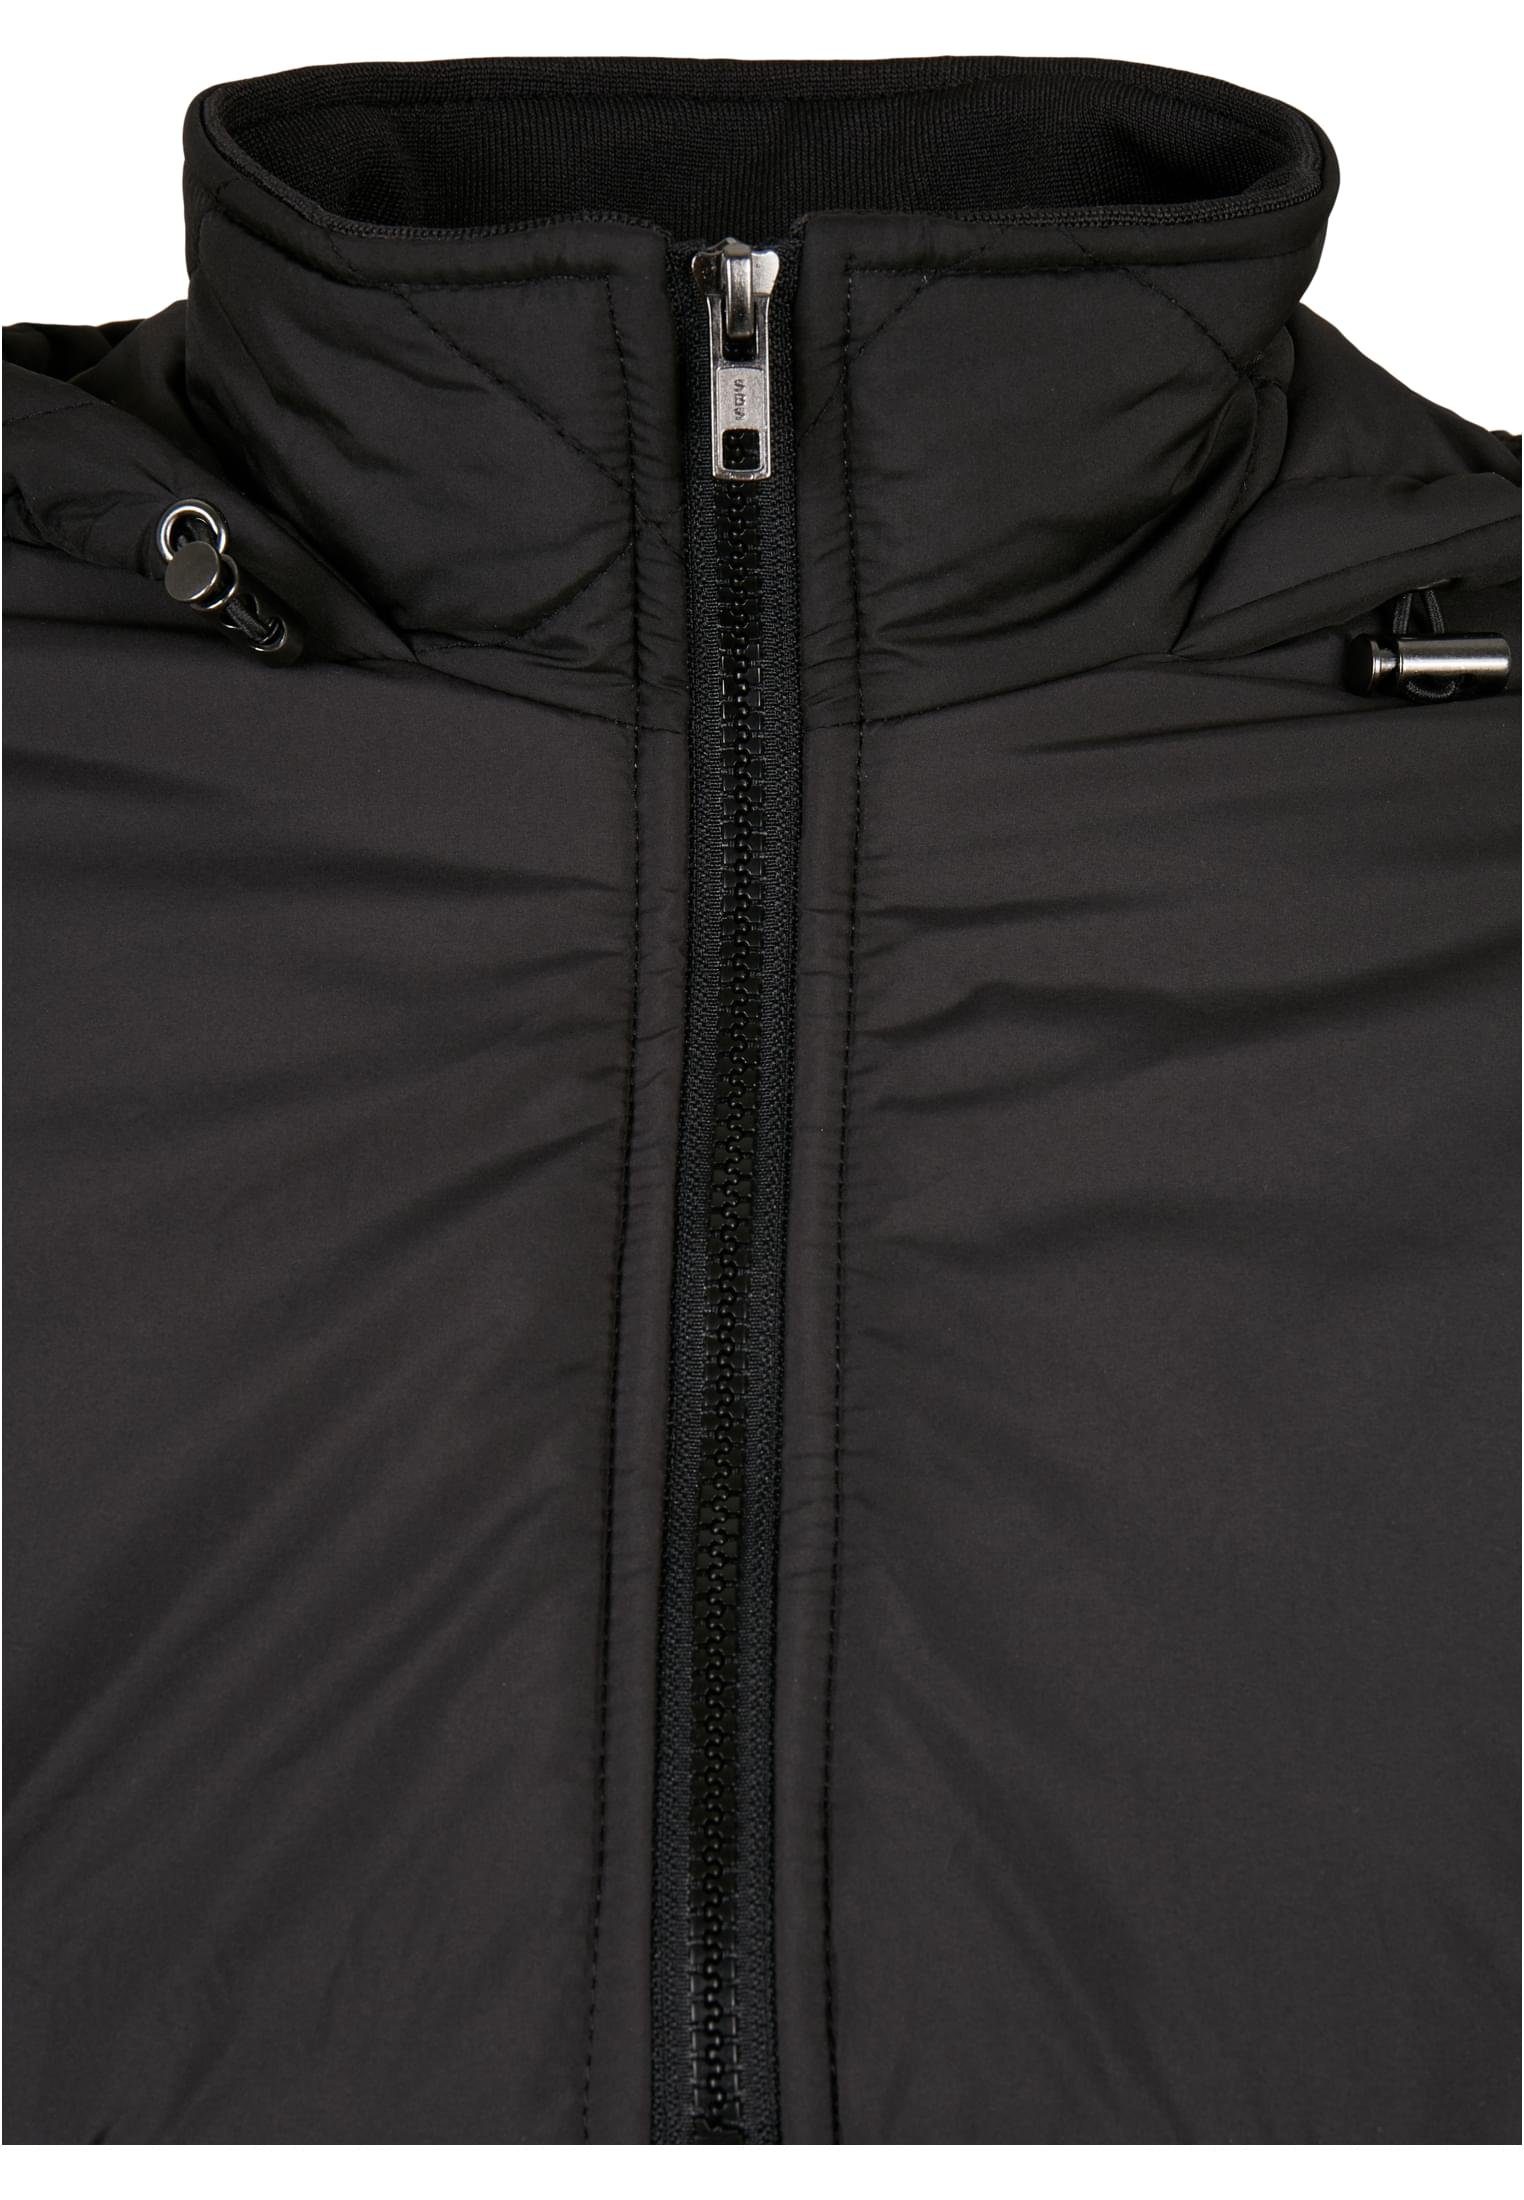 Quilted (1-St) Jacket black Damen Over URBAN Pull Ladies CLASSICS Diamond Oversized Winterjacke